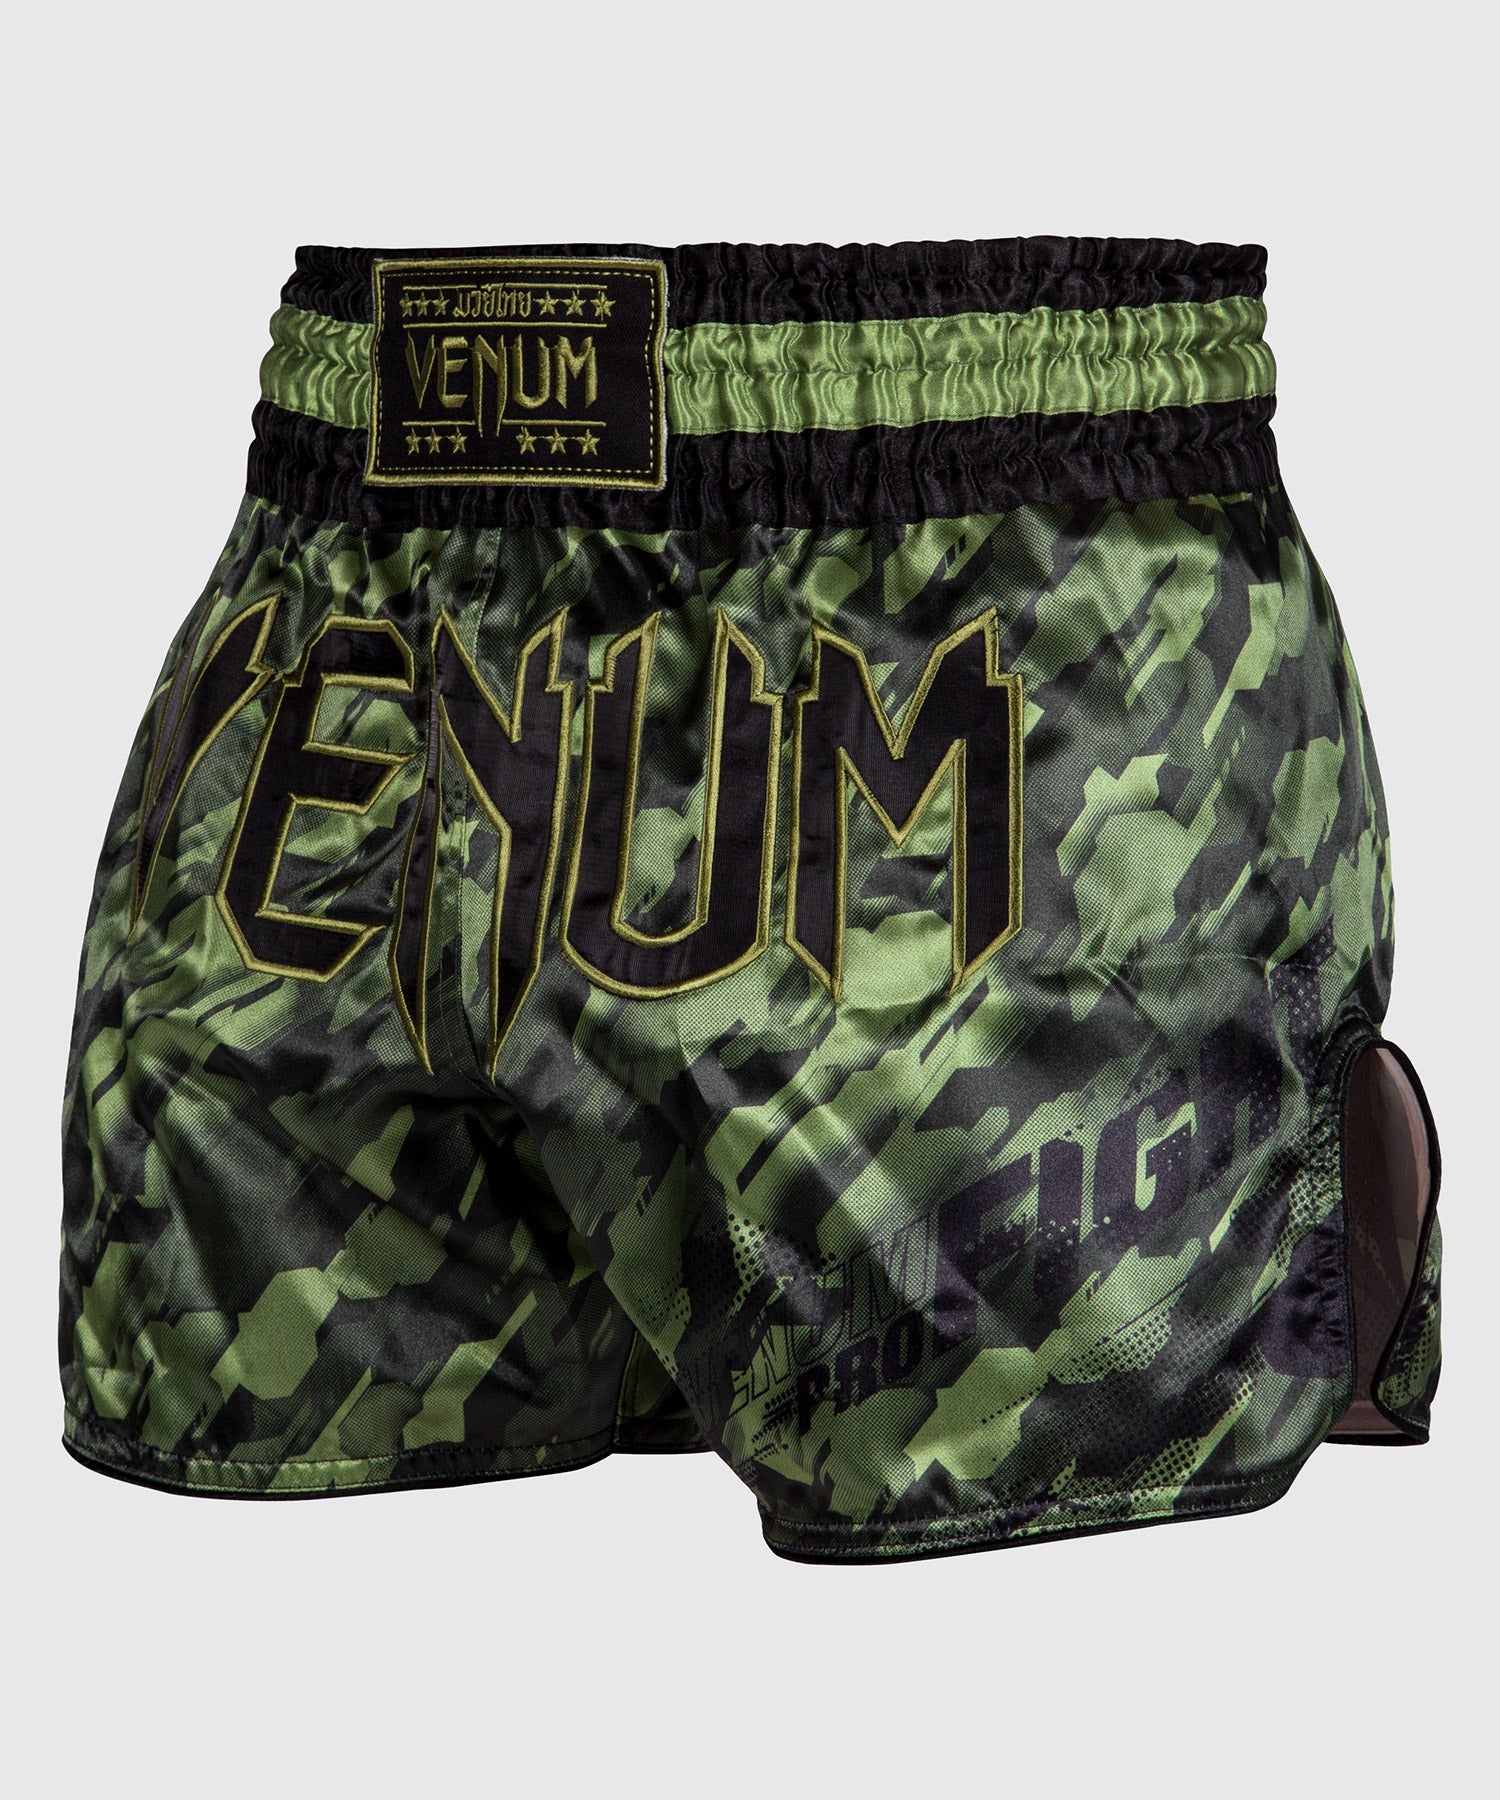 Venum - The Tecmo Muay Thai Shorts are now available worldwide. Enjoy the  Bangkok style! #venum #picoftheday #instacool #bangkok #muaythai  #muaythaishorts #venumgear #venumshorts #tecmo #antoinepinto #boxinggloves  #traininggear